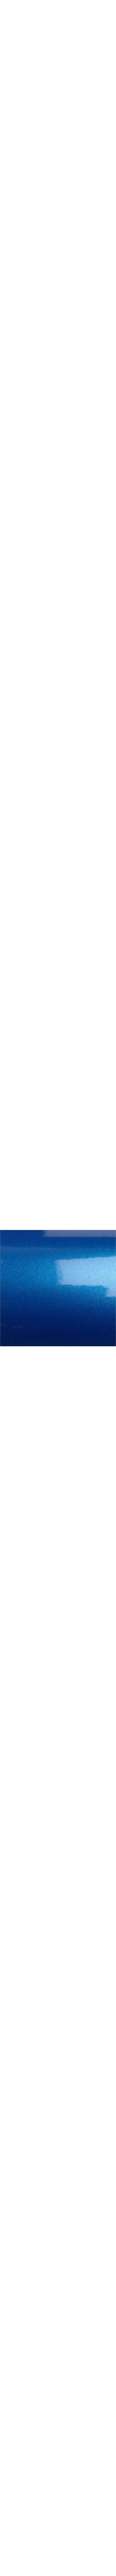 2080-G227 Blue metallic en 1.524m x 22.86ml